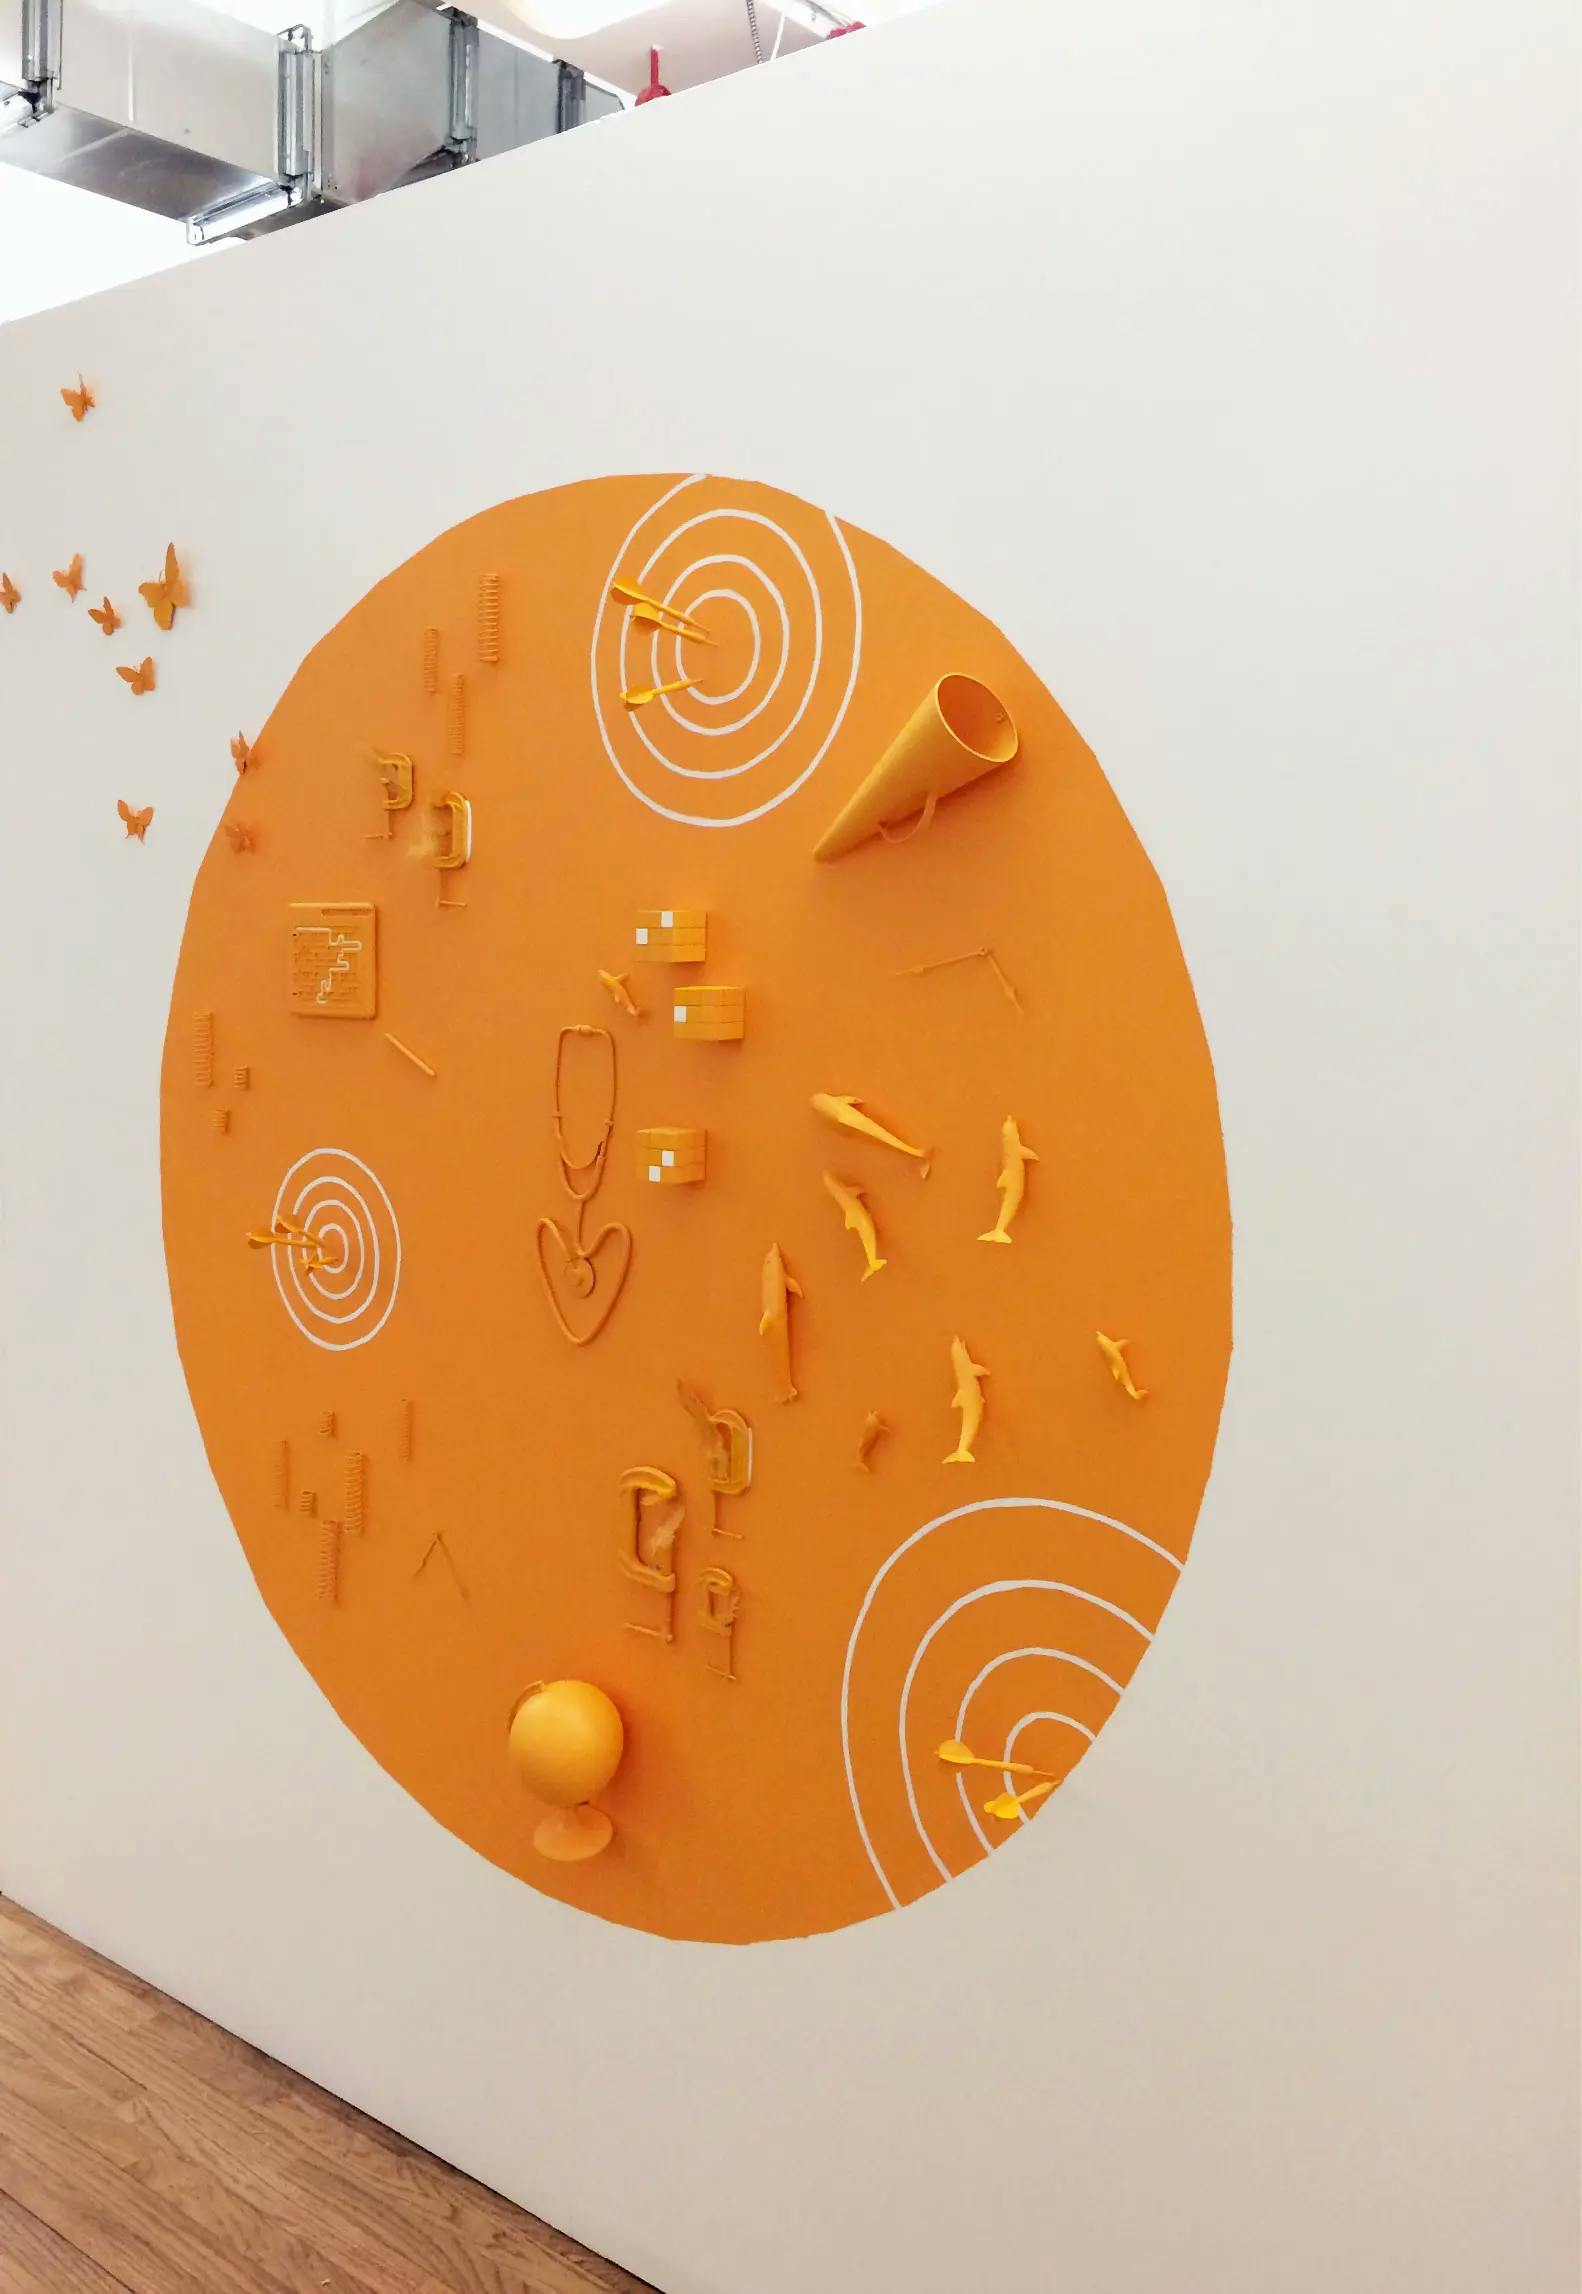 A custom orange wall-installation by artist Christina Watka at One Medical Group.